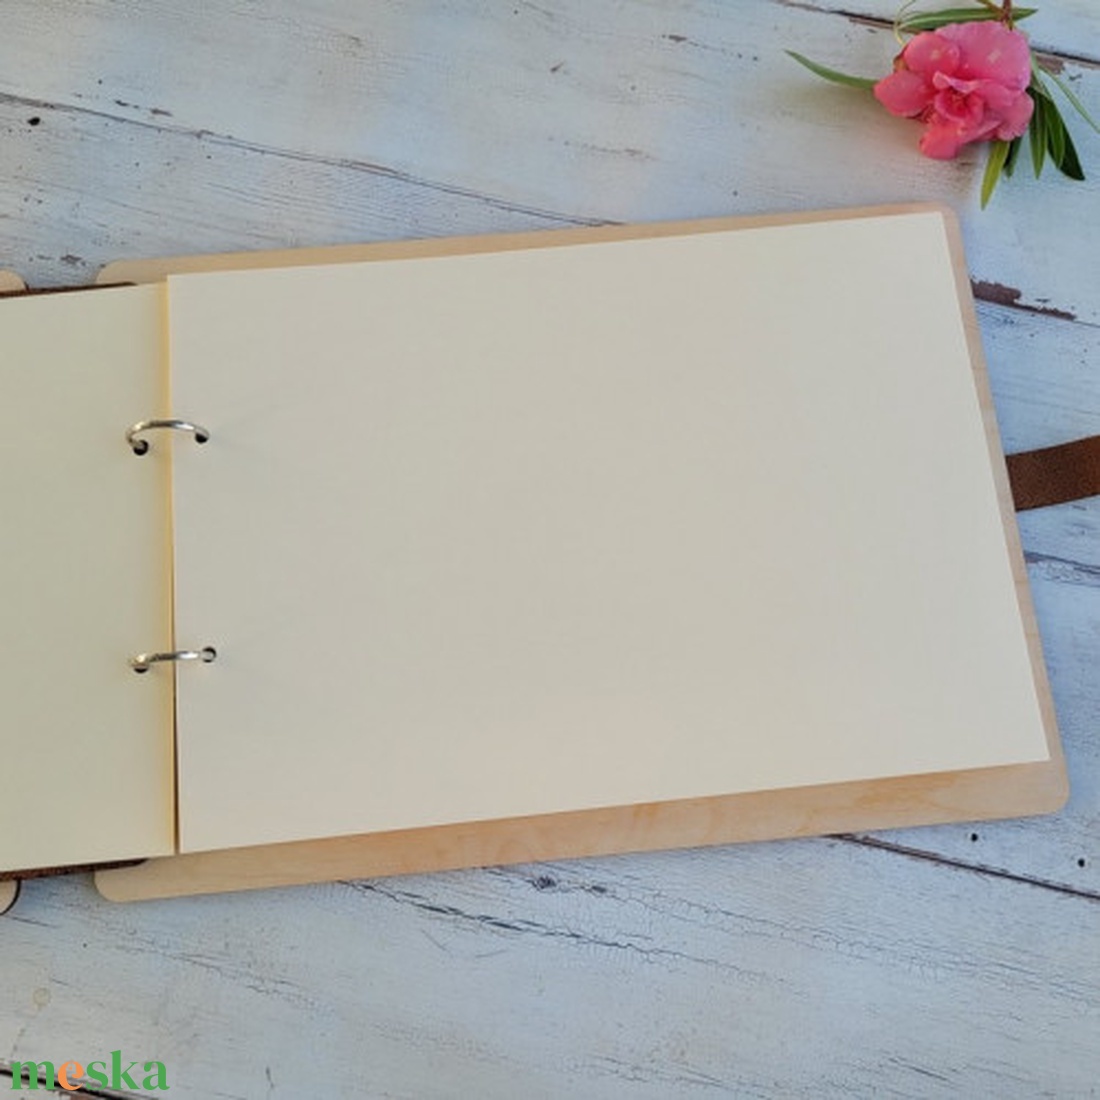 Esküvői vendégkönyv - emlékkönyv fa borítóval - esküvő - emlék & ajándék - vendégkönyv - Meska.hu